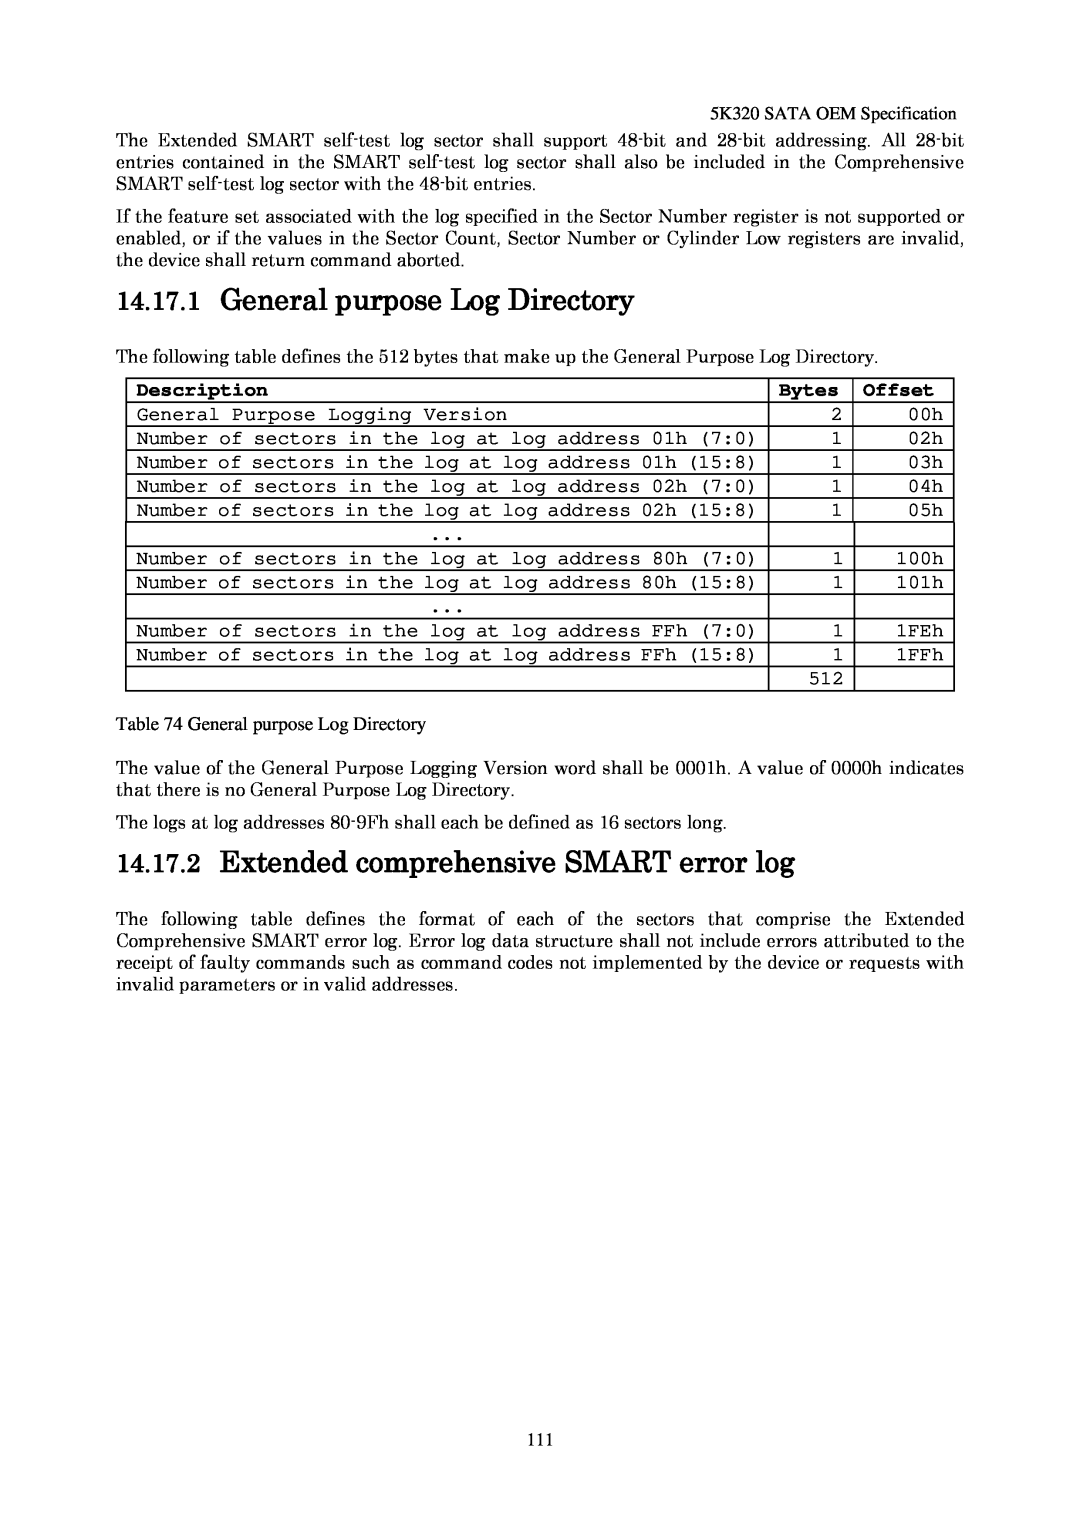 Hitachi HTS543216L9SA00 14.17.1General purpose Log Directory, 14.17.2Extended comprehensive SMART error log, Description 